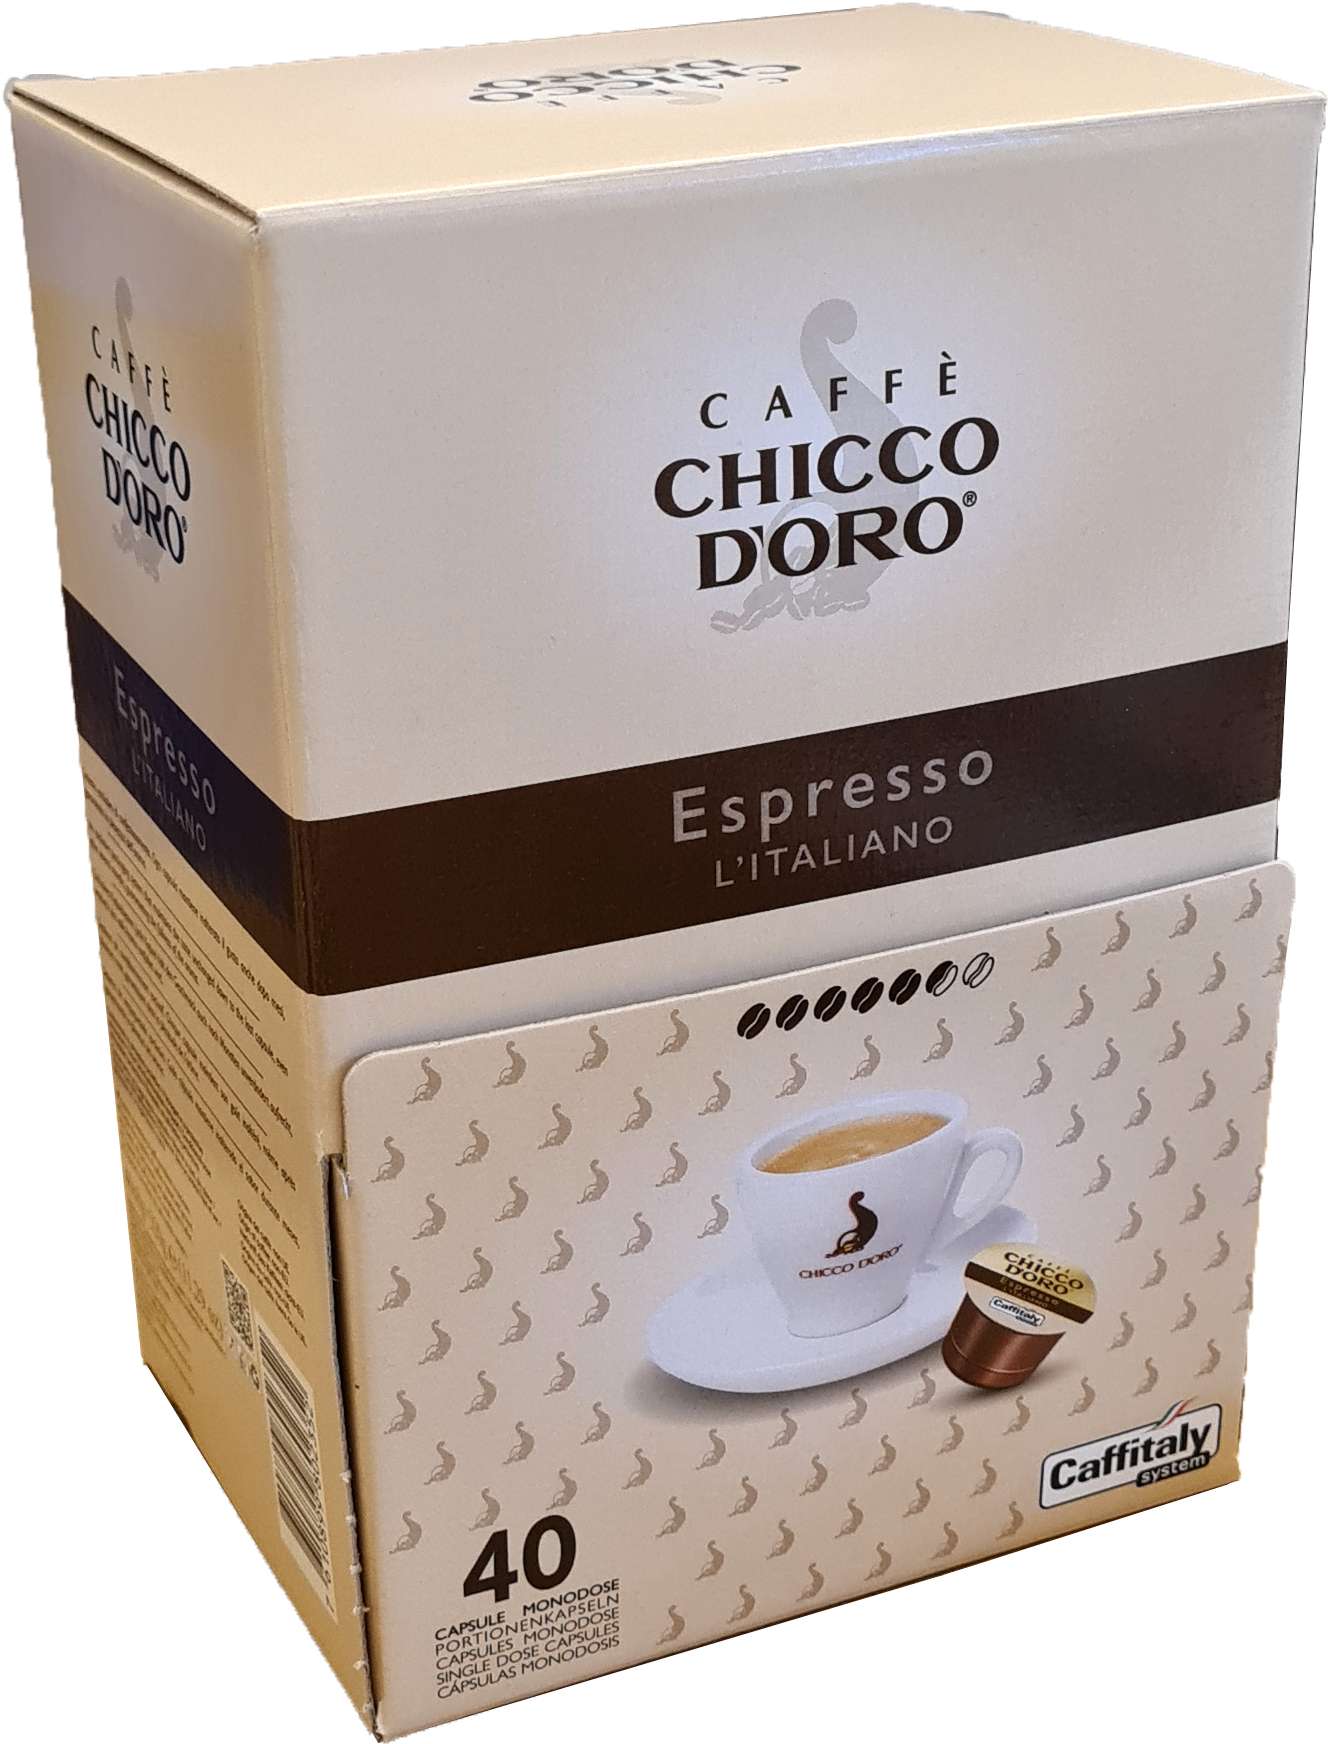 CHICCO D'ORO Kaffee Caffitaly 802352 Espresso Italiano 40 Stück